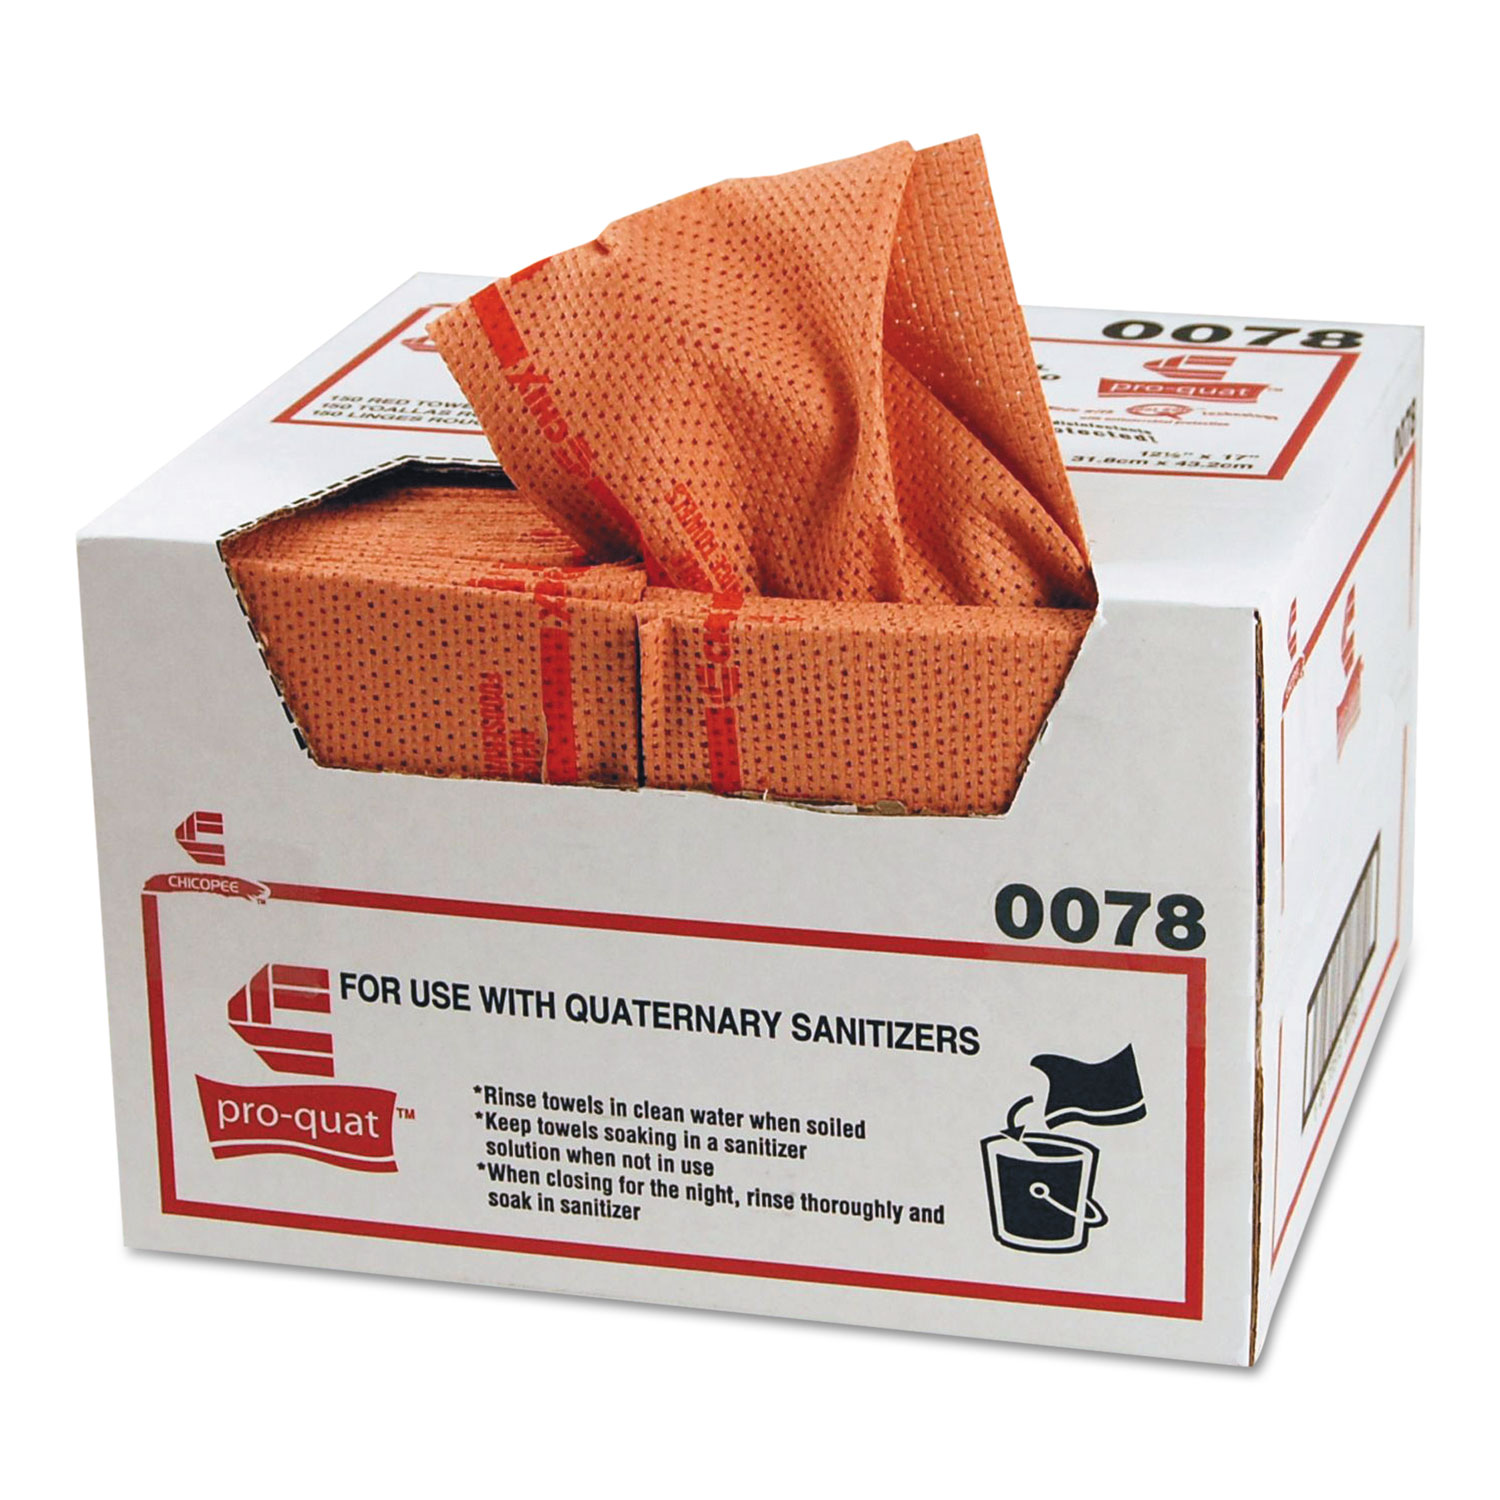  Chix CHI 0078 Pro-Quat Fresh Guy Food Service Towels, Heavy Duty, 12 1/2 x 17, Red, 150/Carton (CHI0078) 